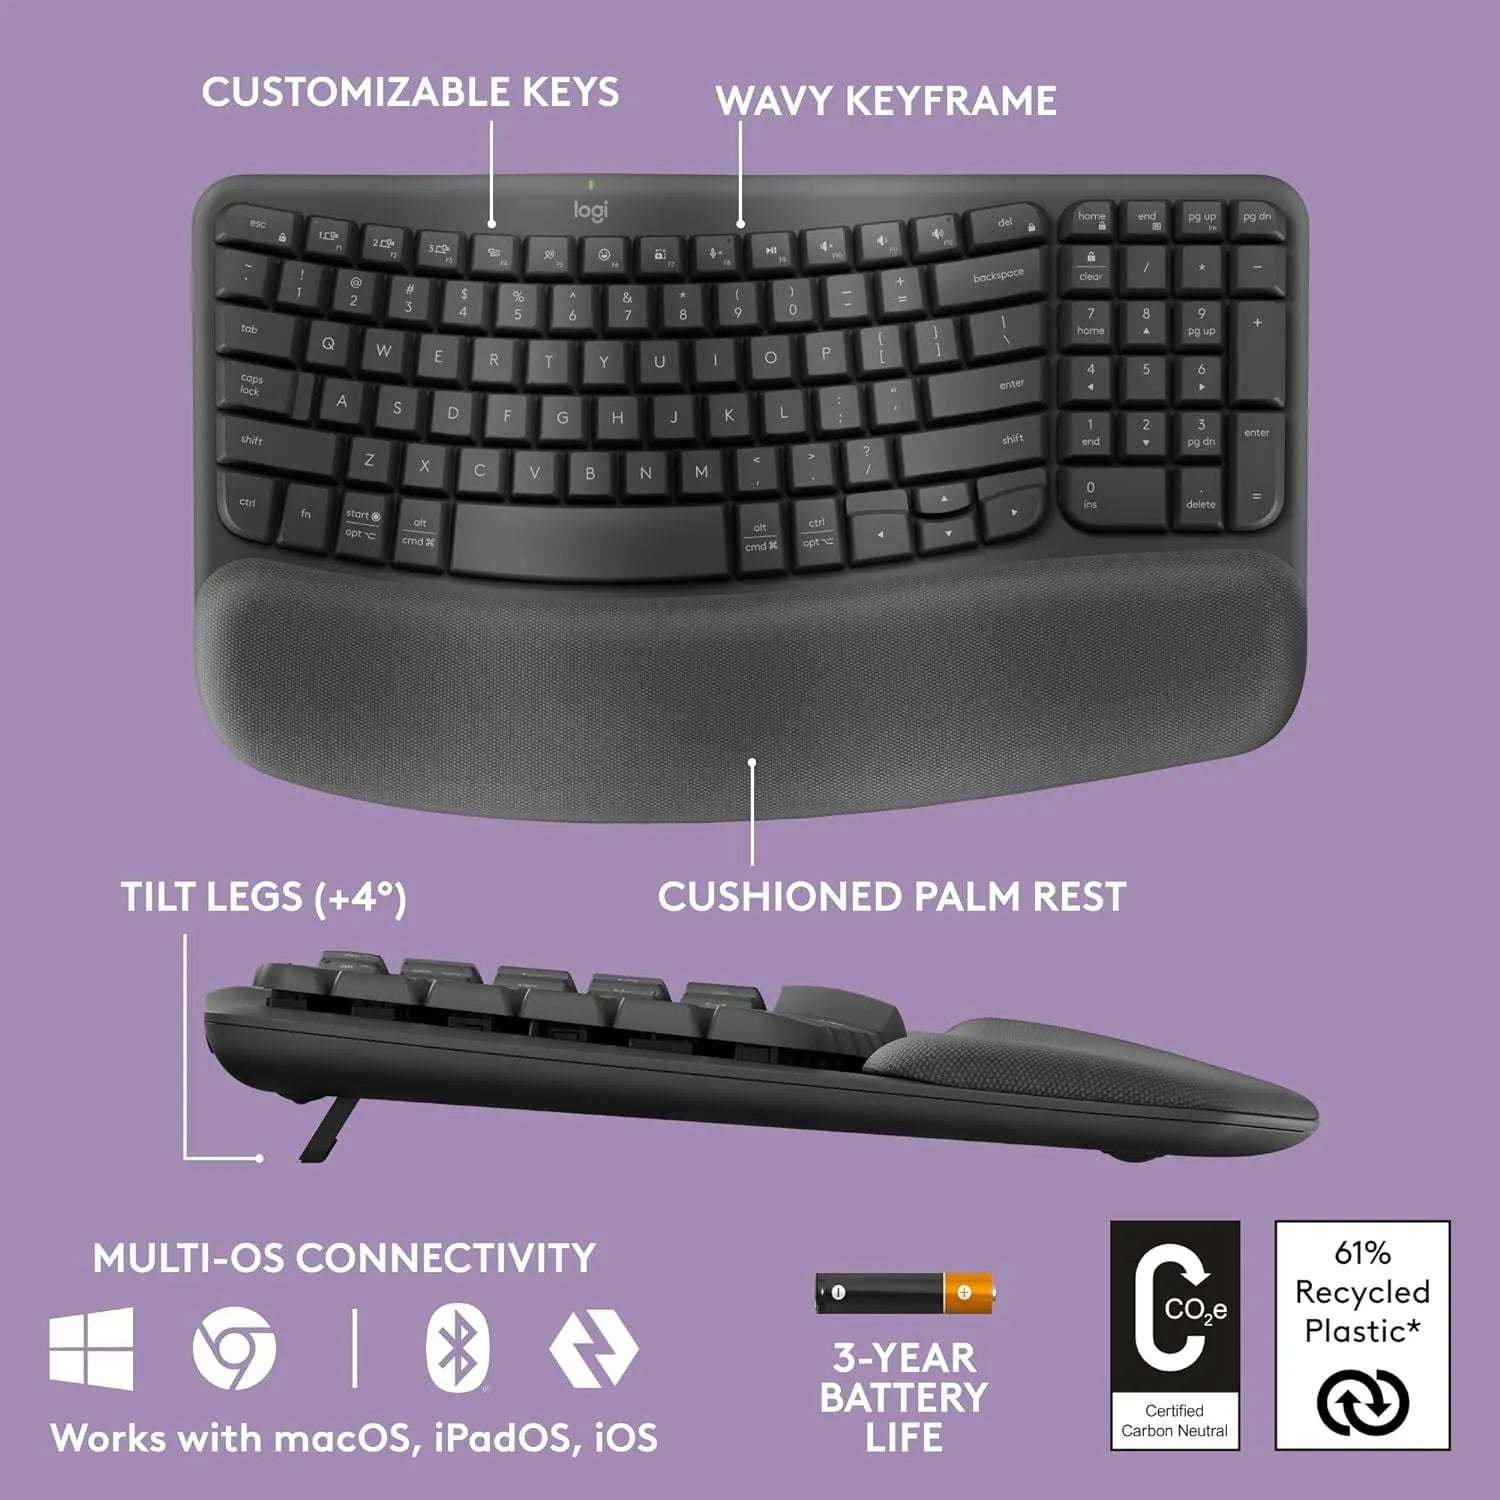 Logitech Wave Keys Wireless + Bluetooth Ergonomic Keyboard